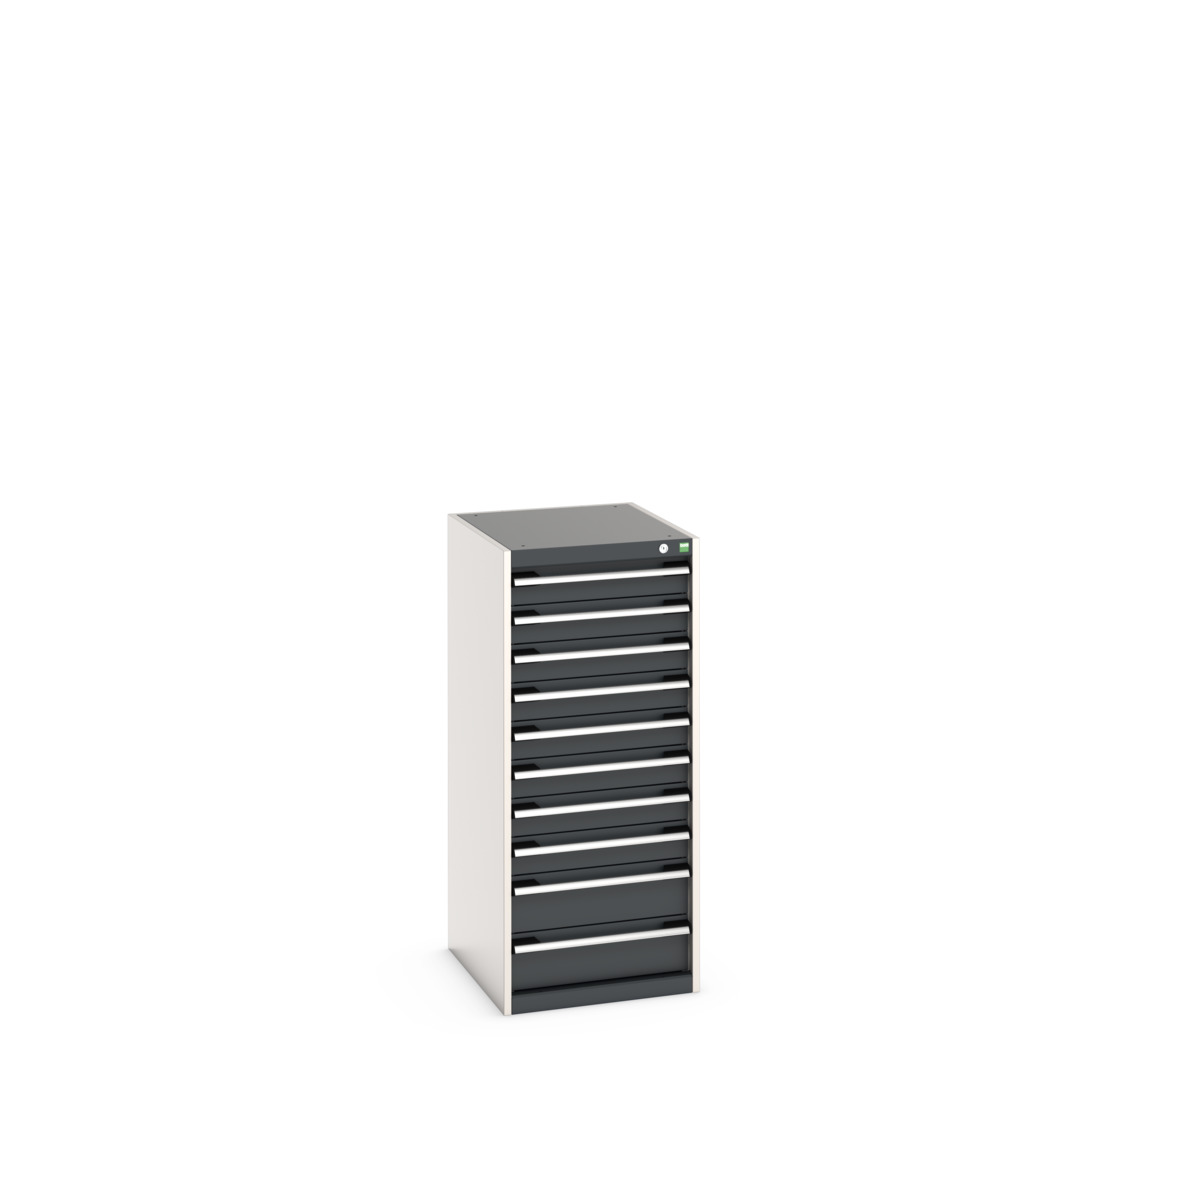 40018073. - cubio drawer cabinet